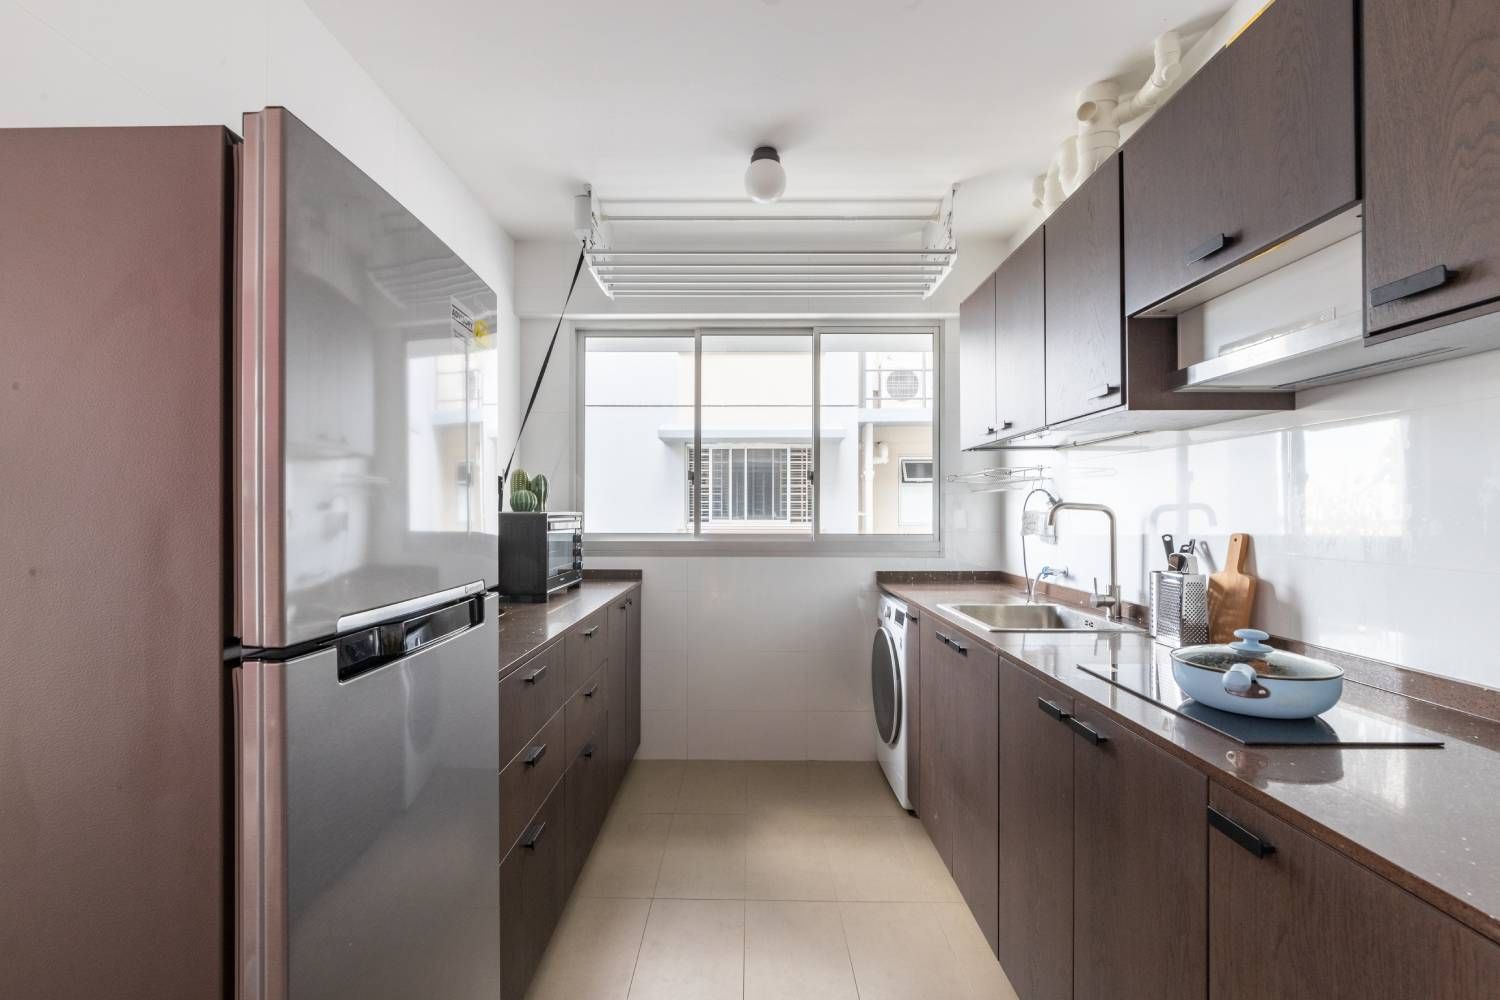 Contemporary Parallel Kitchen Interior Design with Dark Wooden Cabinets and Granite Countertop